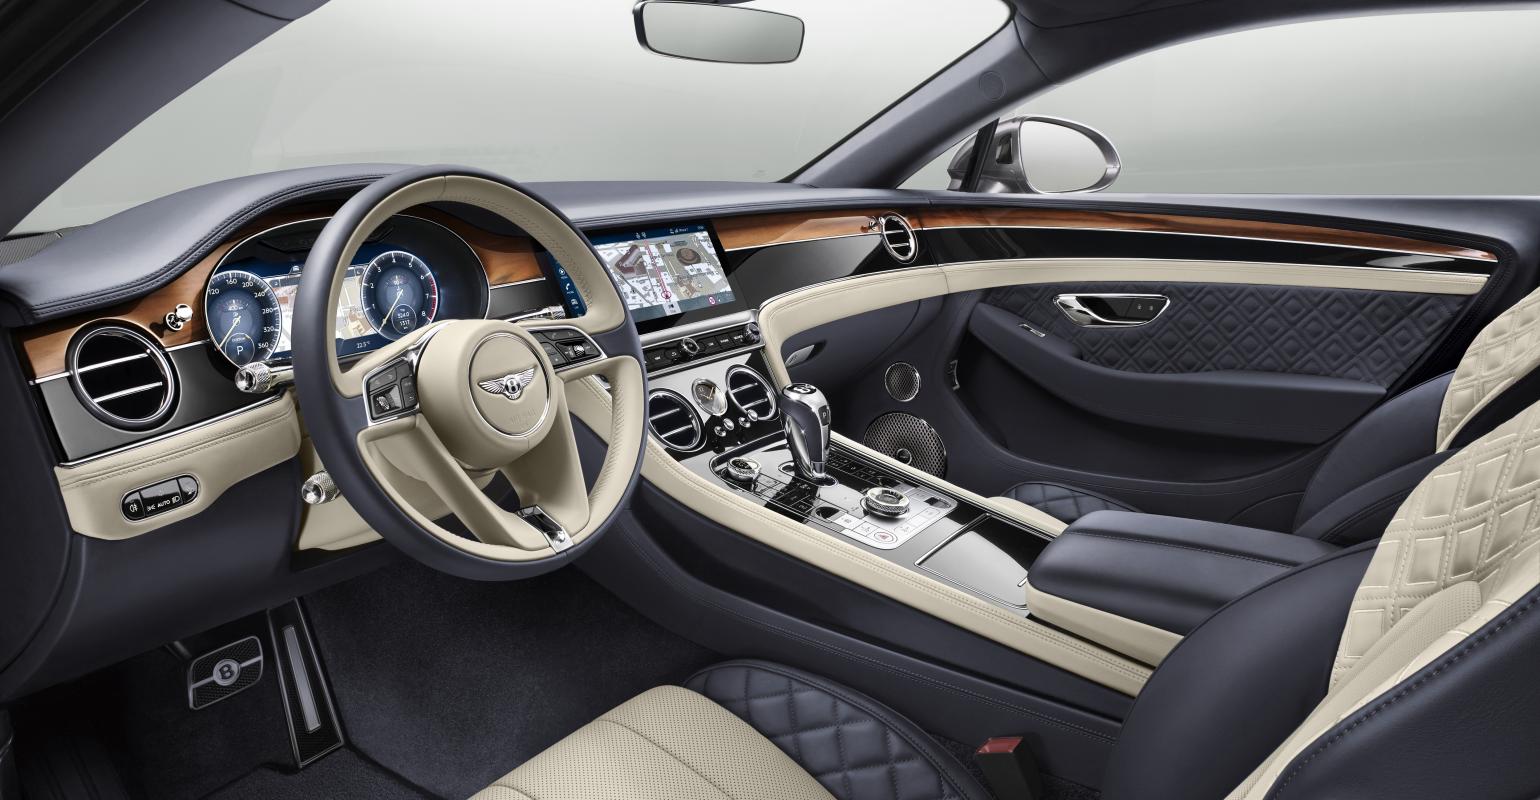 Continental Gt Sports Bentley S Sinewy New Interior Design